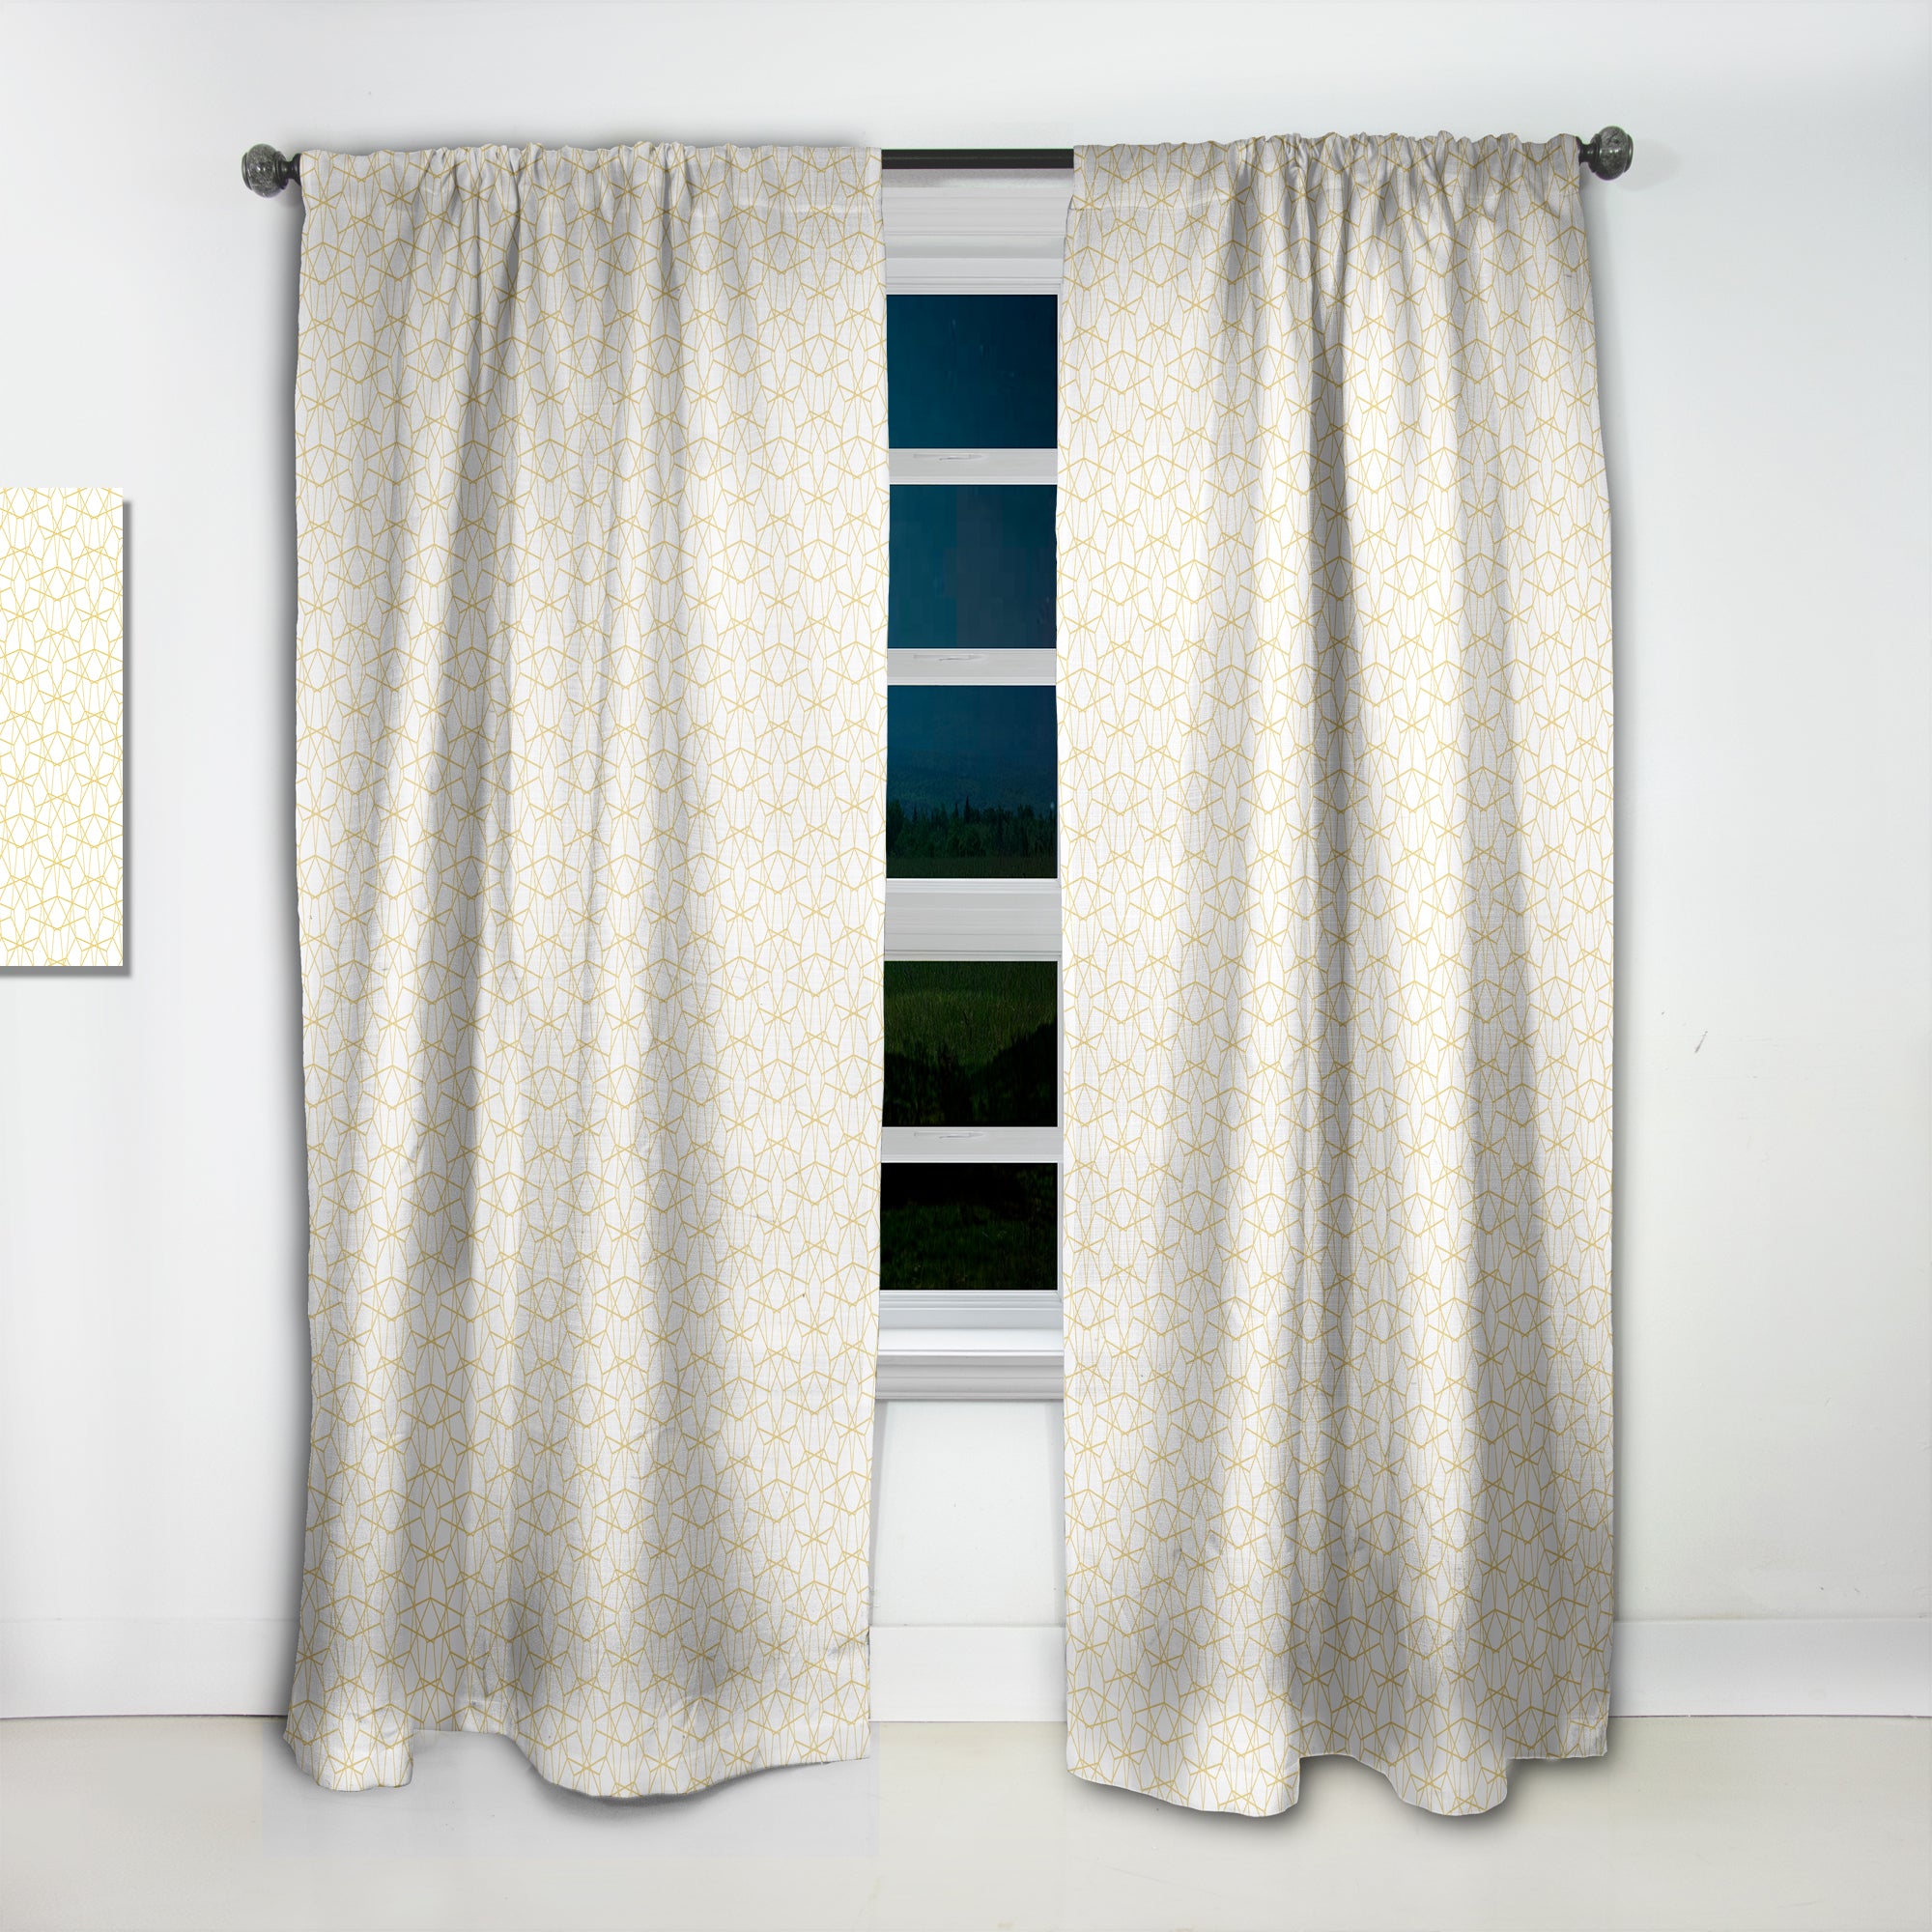 Designart 'Abstract Geometrical ' Mid-Century Modern Curtain Panel